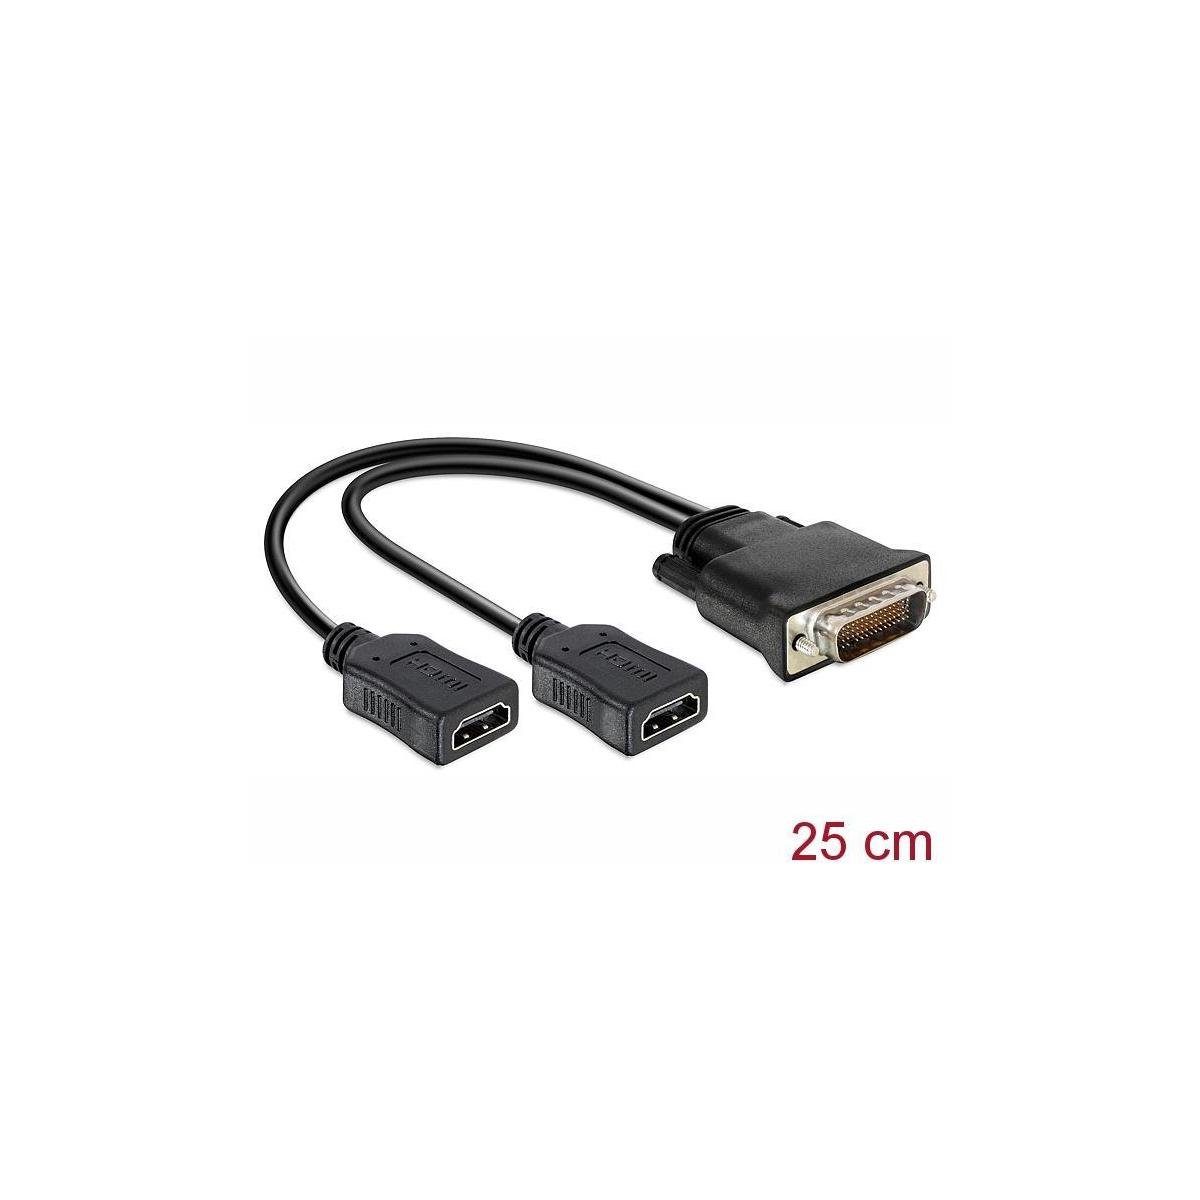 DMS-59 HDMI 20cm HDMI > Delock DMS-59, 2 Stecker Adapter Computer-Kabel, Buchse x